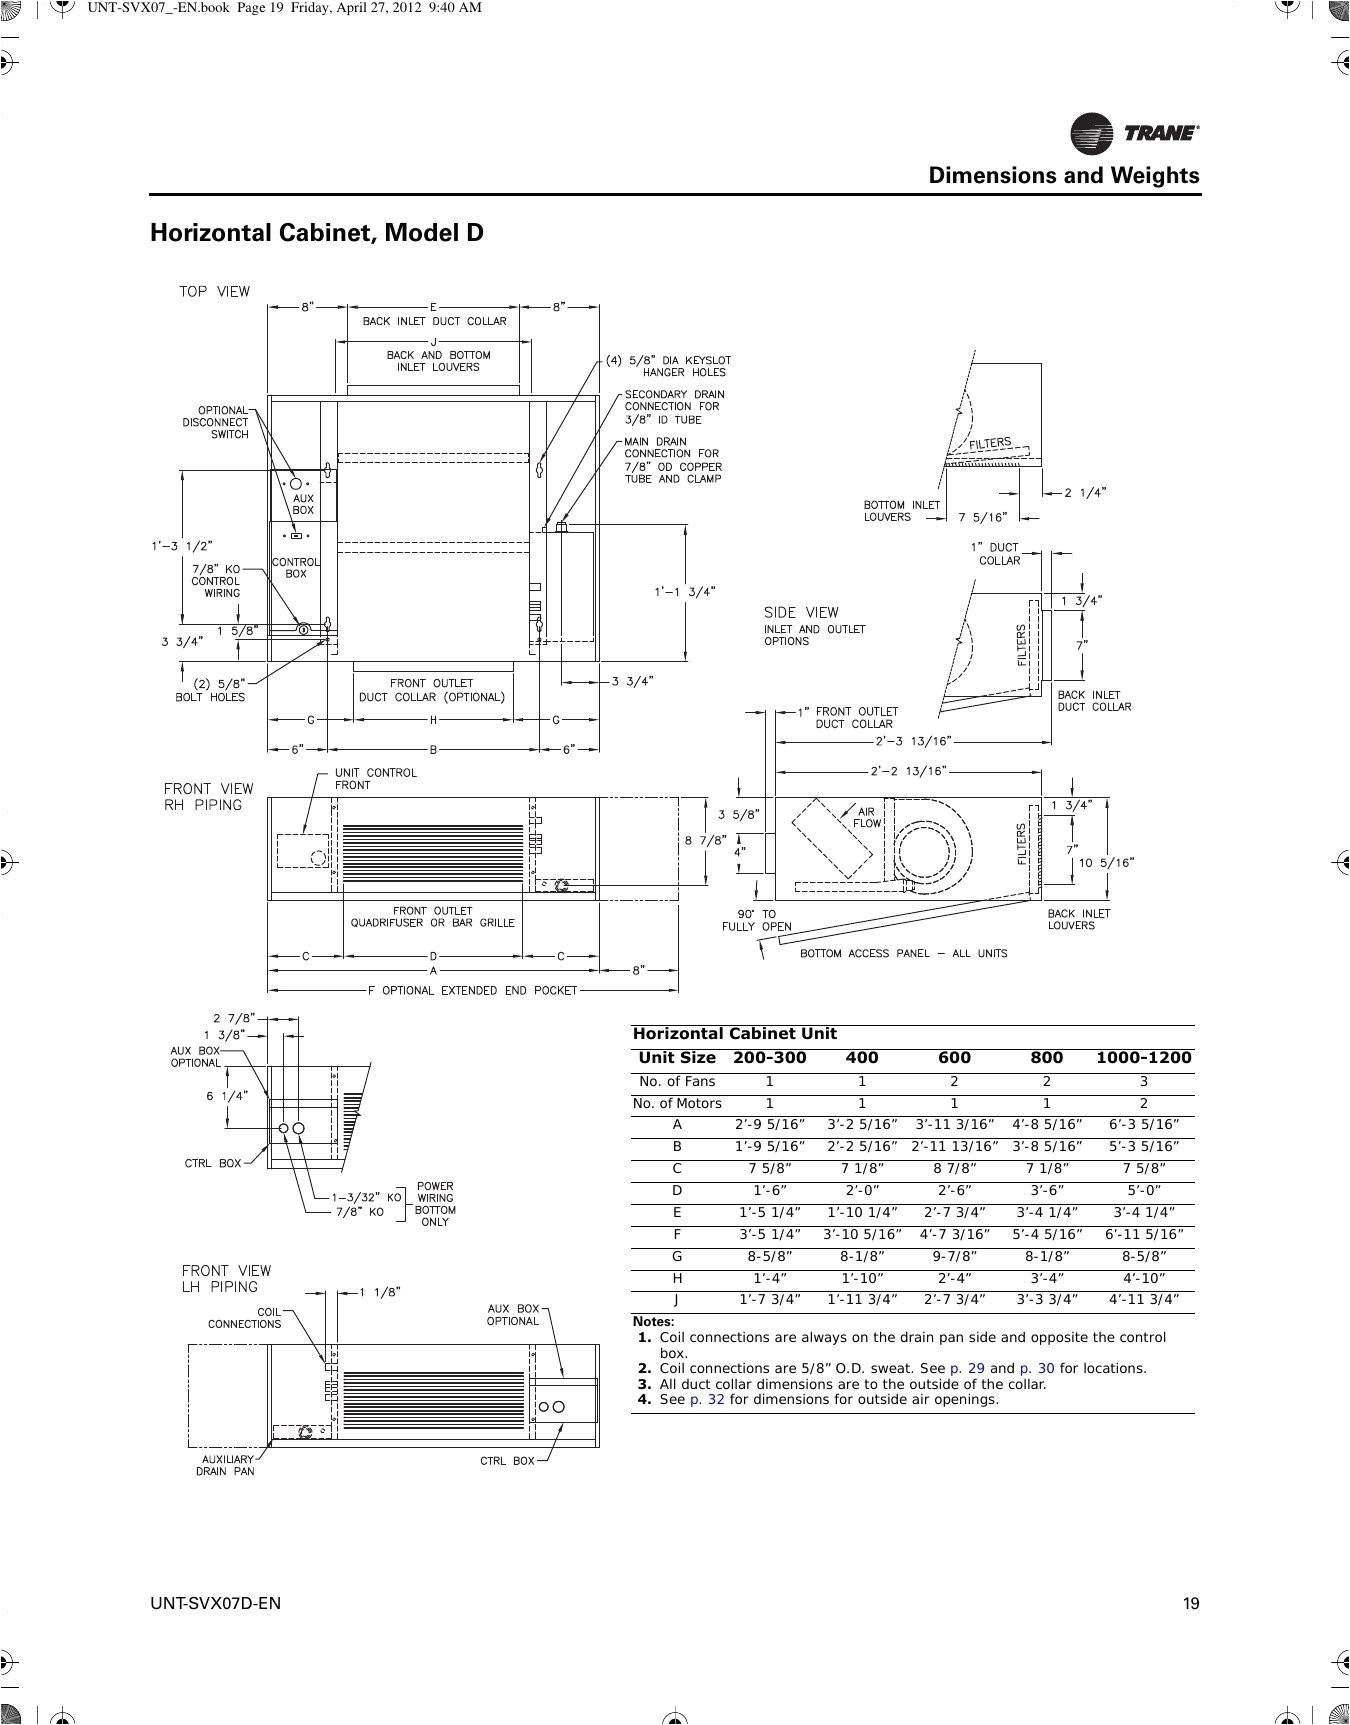 trane wiring diagram heat pump hvac heater wiring diagram inspirationa inspirational trane wiring diagram heat pump 17m jpg